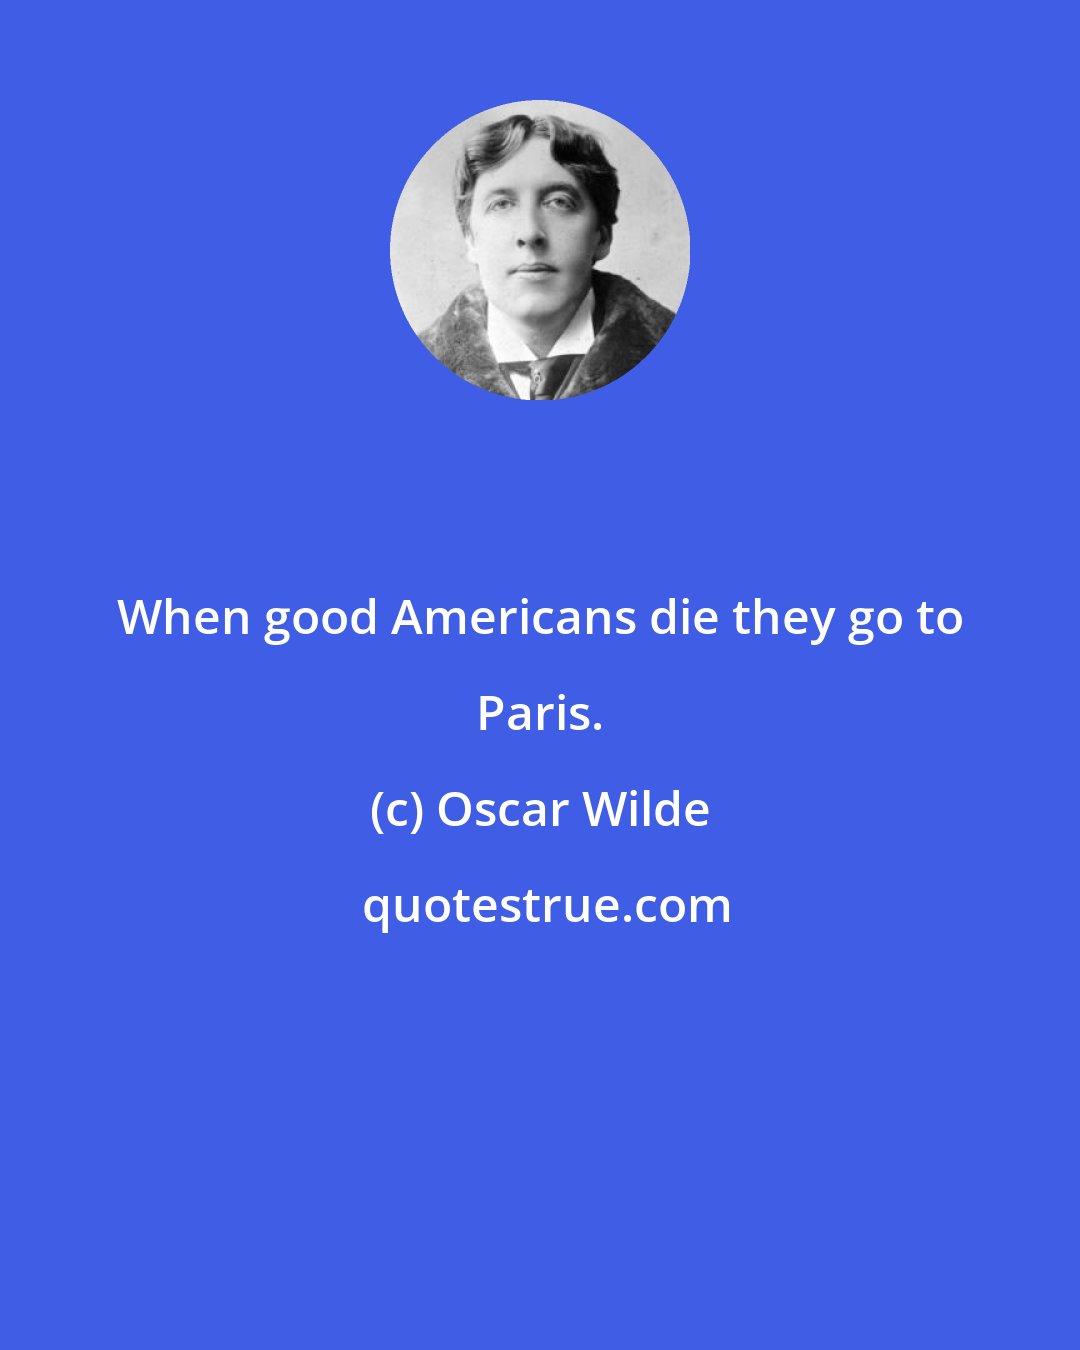 Oscar Wilde: When good Americans die they go to Paris.